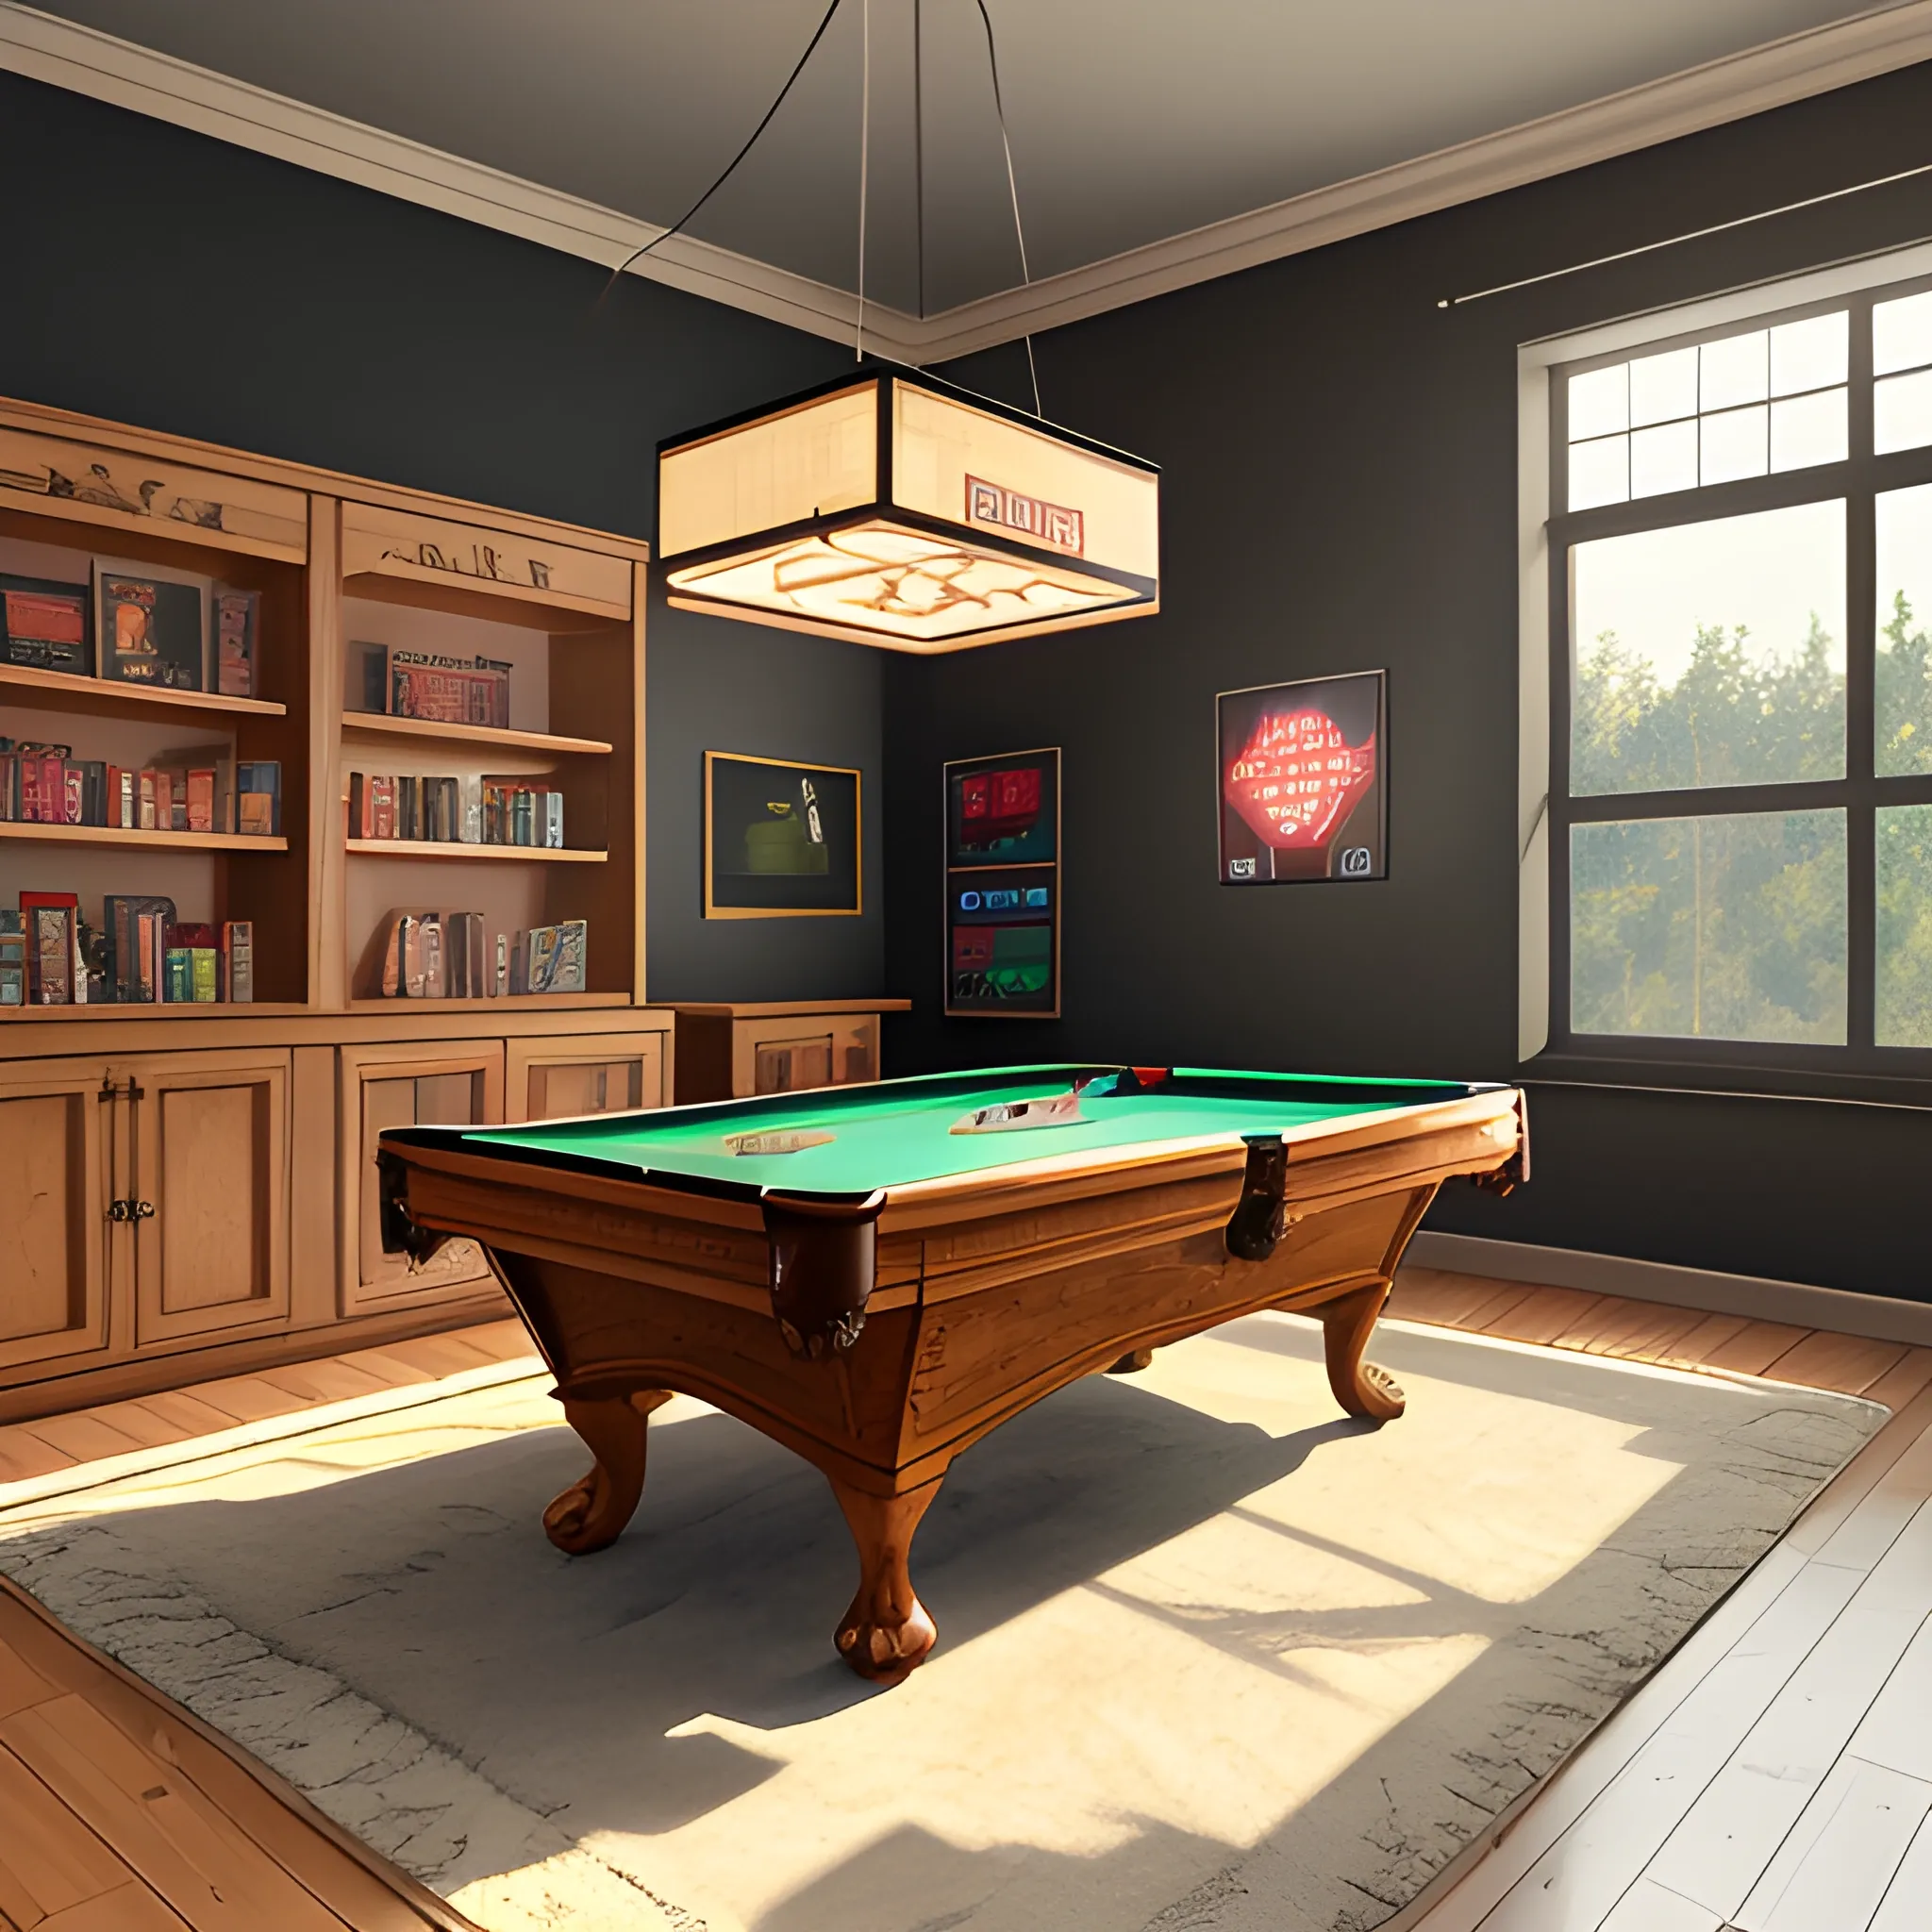 Game room,Modern,Natural lighting,extremely detailed,8K,Hyperrealistic,Artwork, 3D